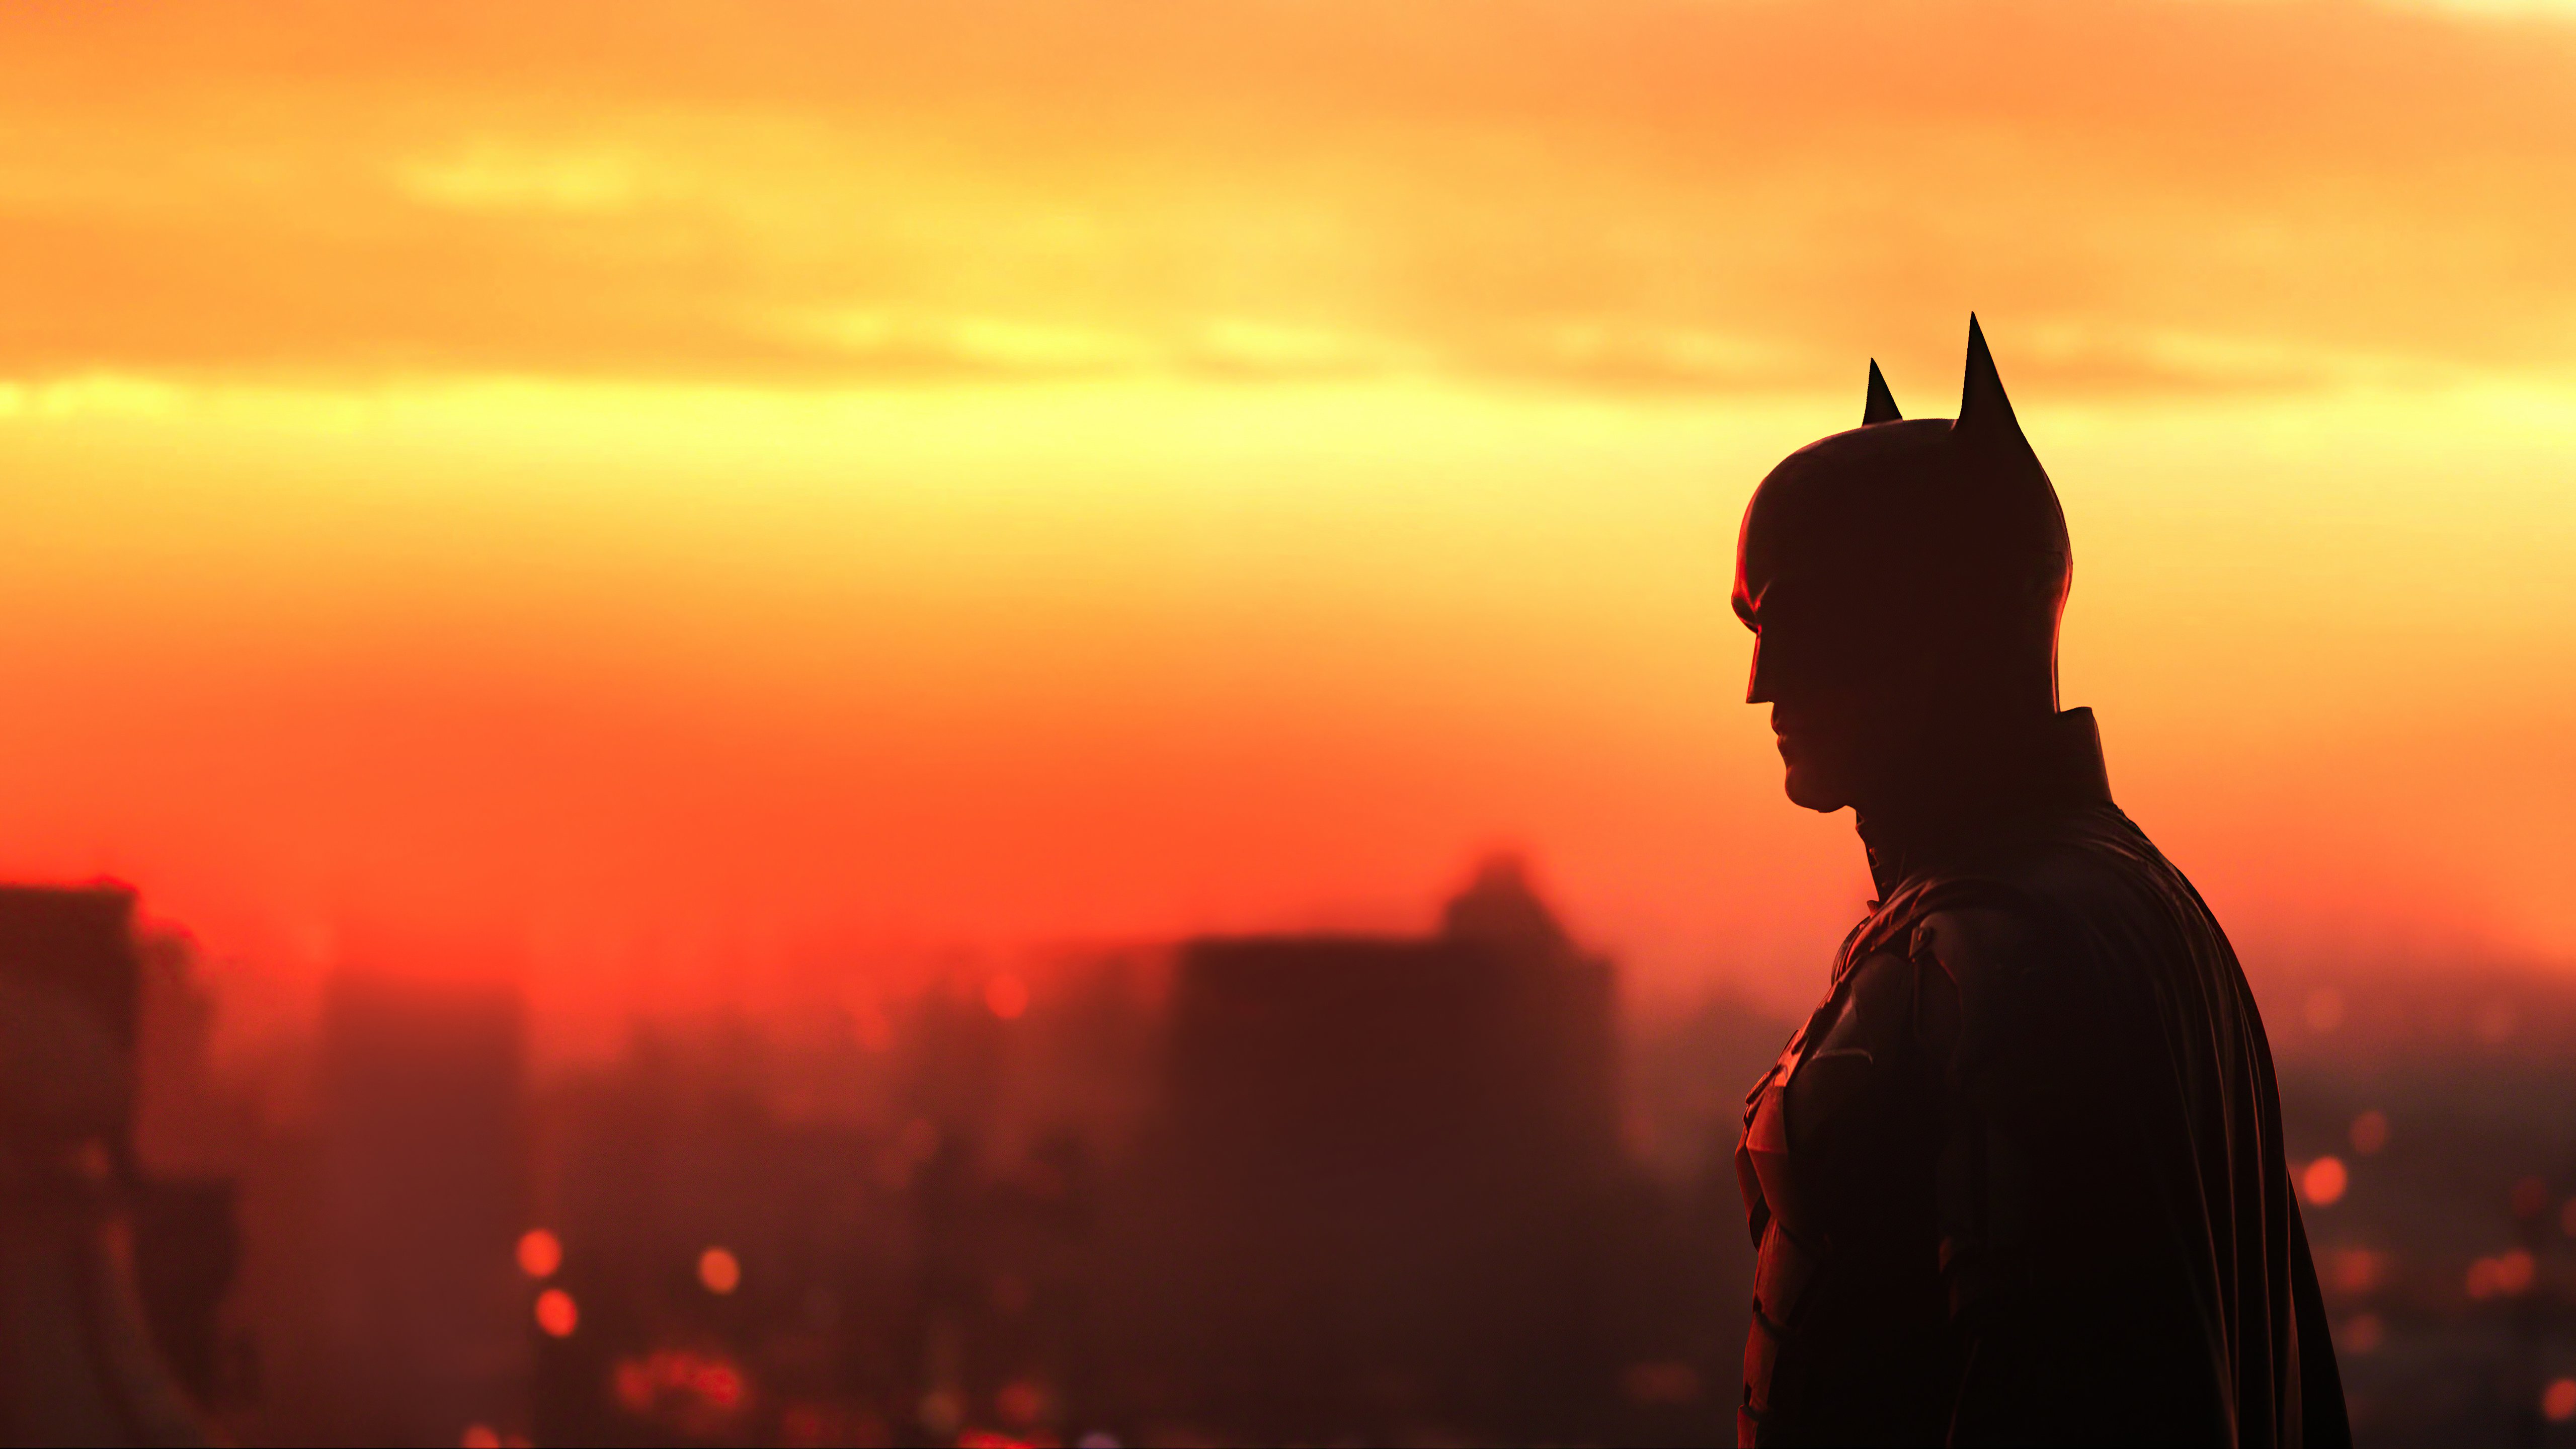 The Batman over Gotham city Wallpaper 5k Ultra HD ID:10026